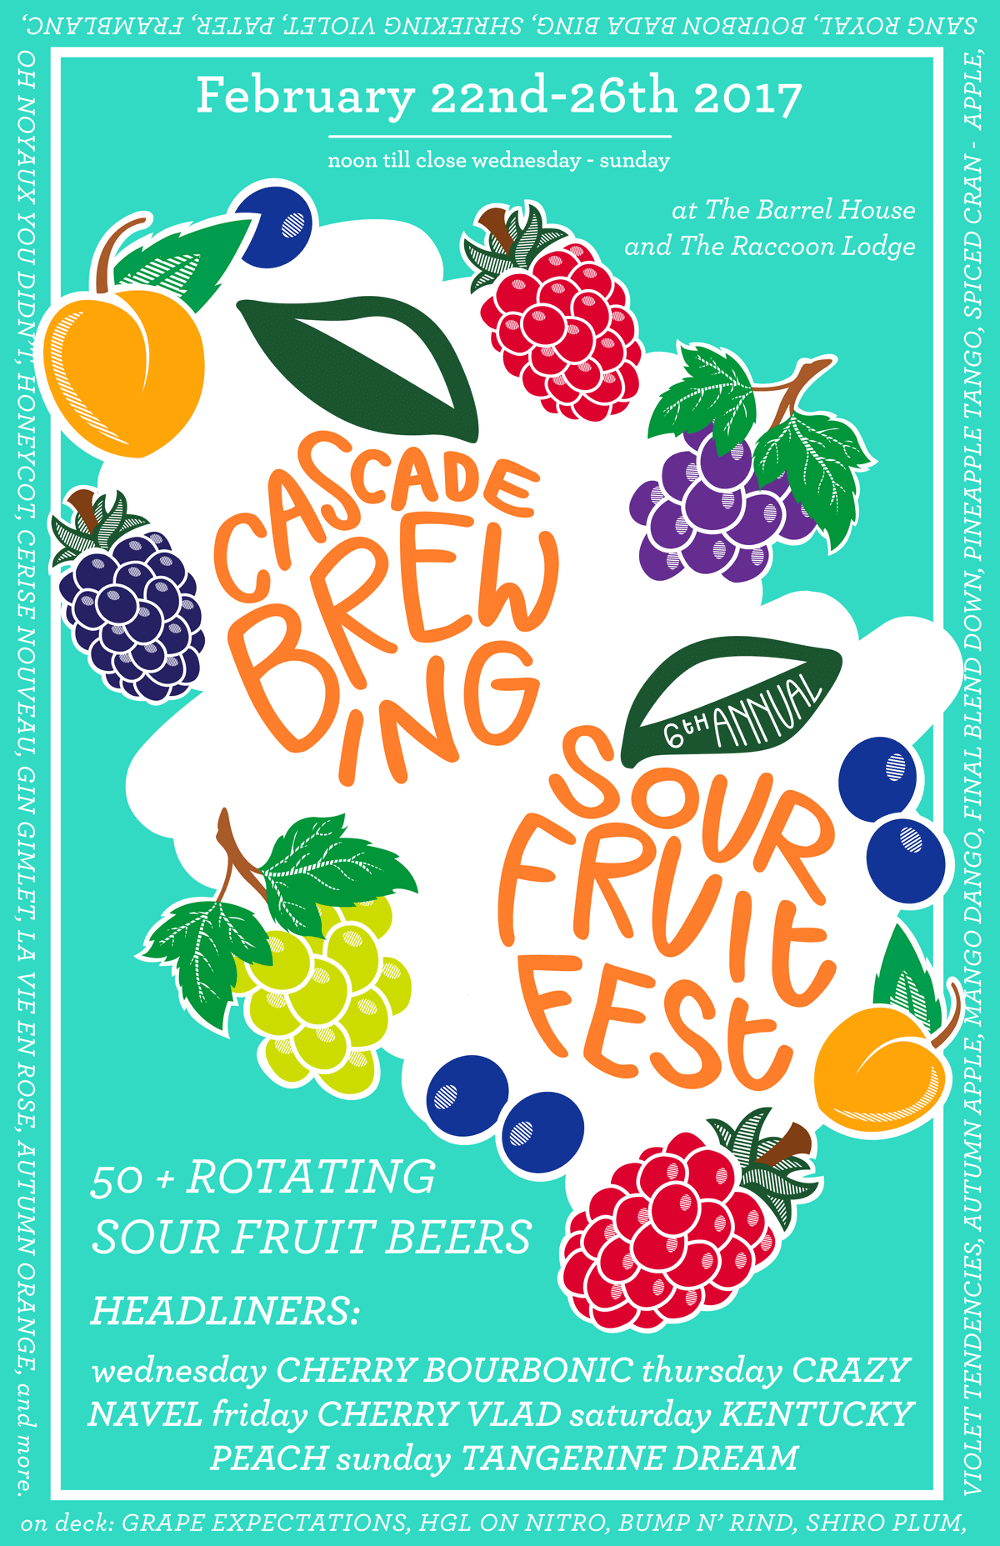 Cascade Brewing’s annual Sour Fruit Fest returns